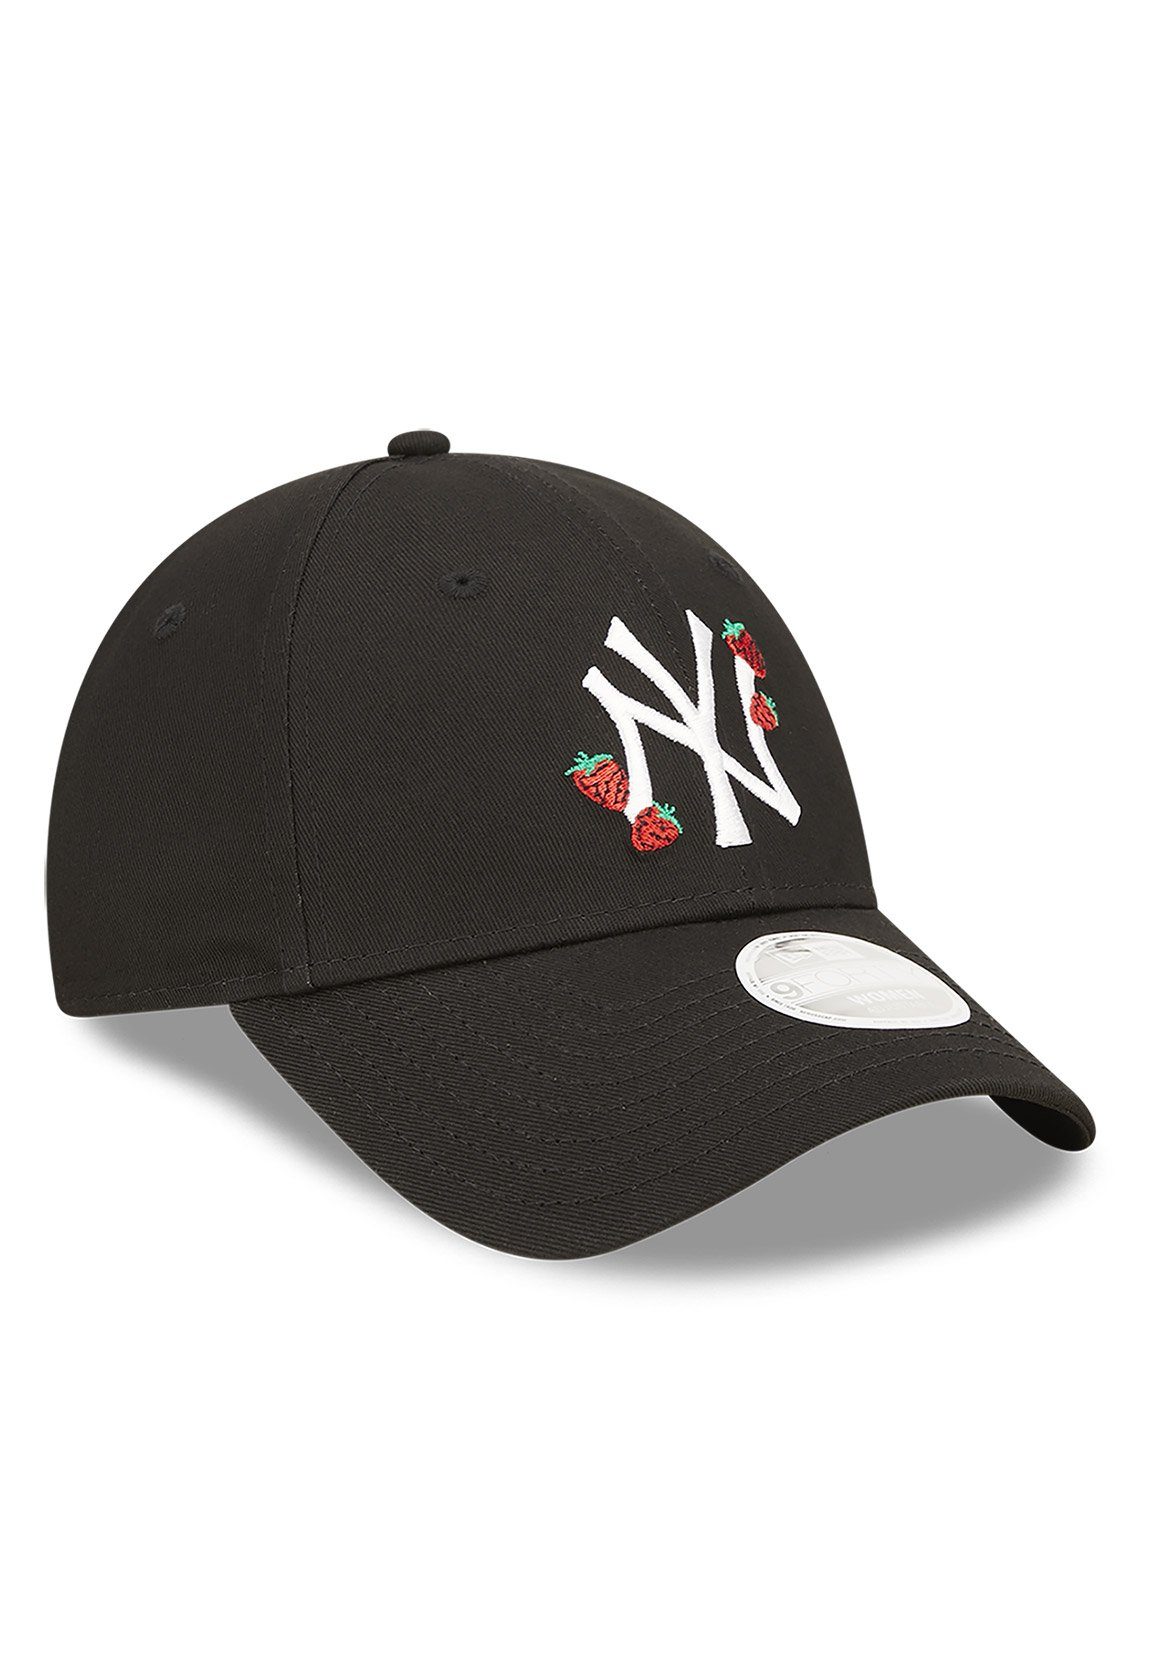 New Cap Cap Era New Strawberry YANKEES 9Forty Adjustable NY Era Wmns Baseball Damen